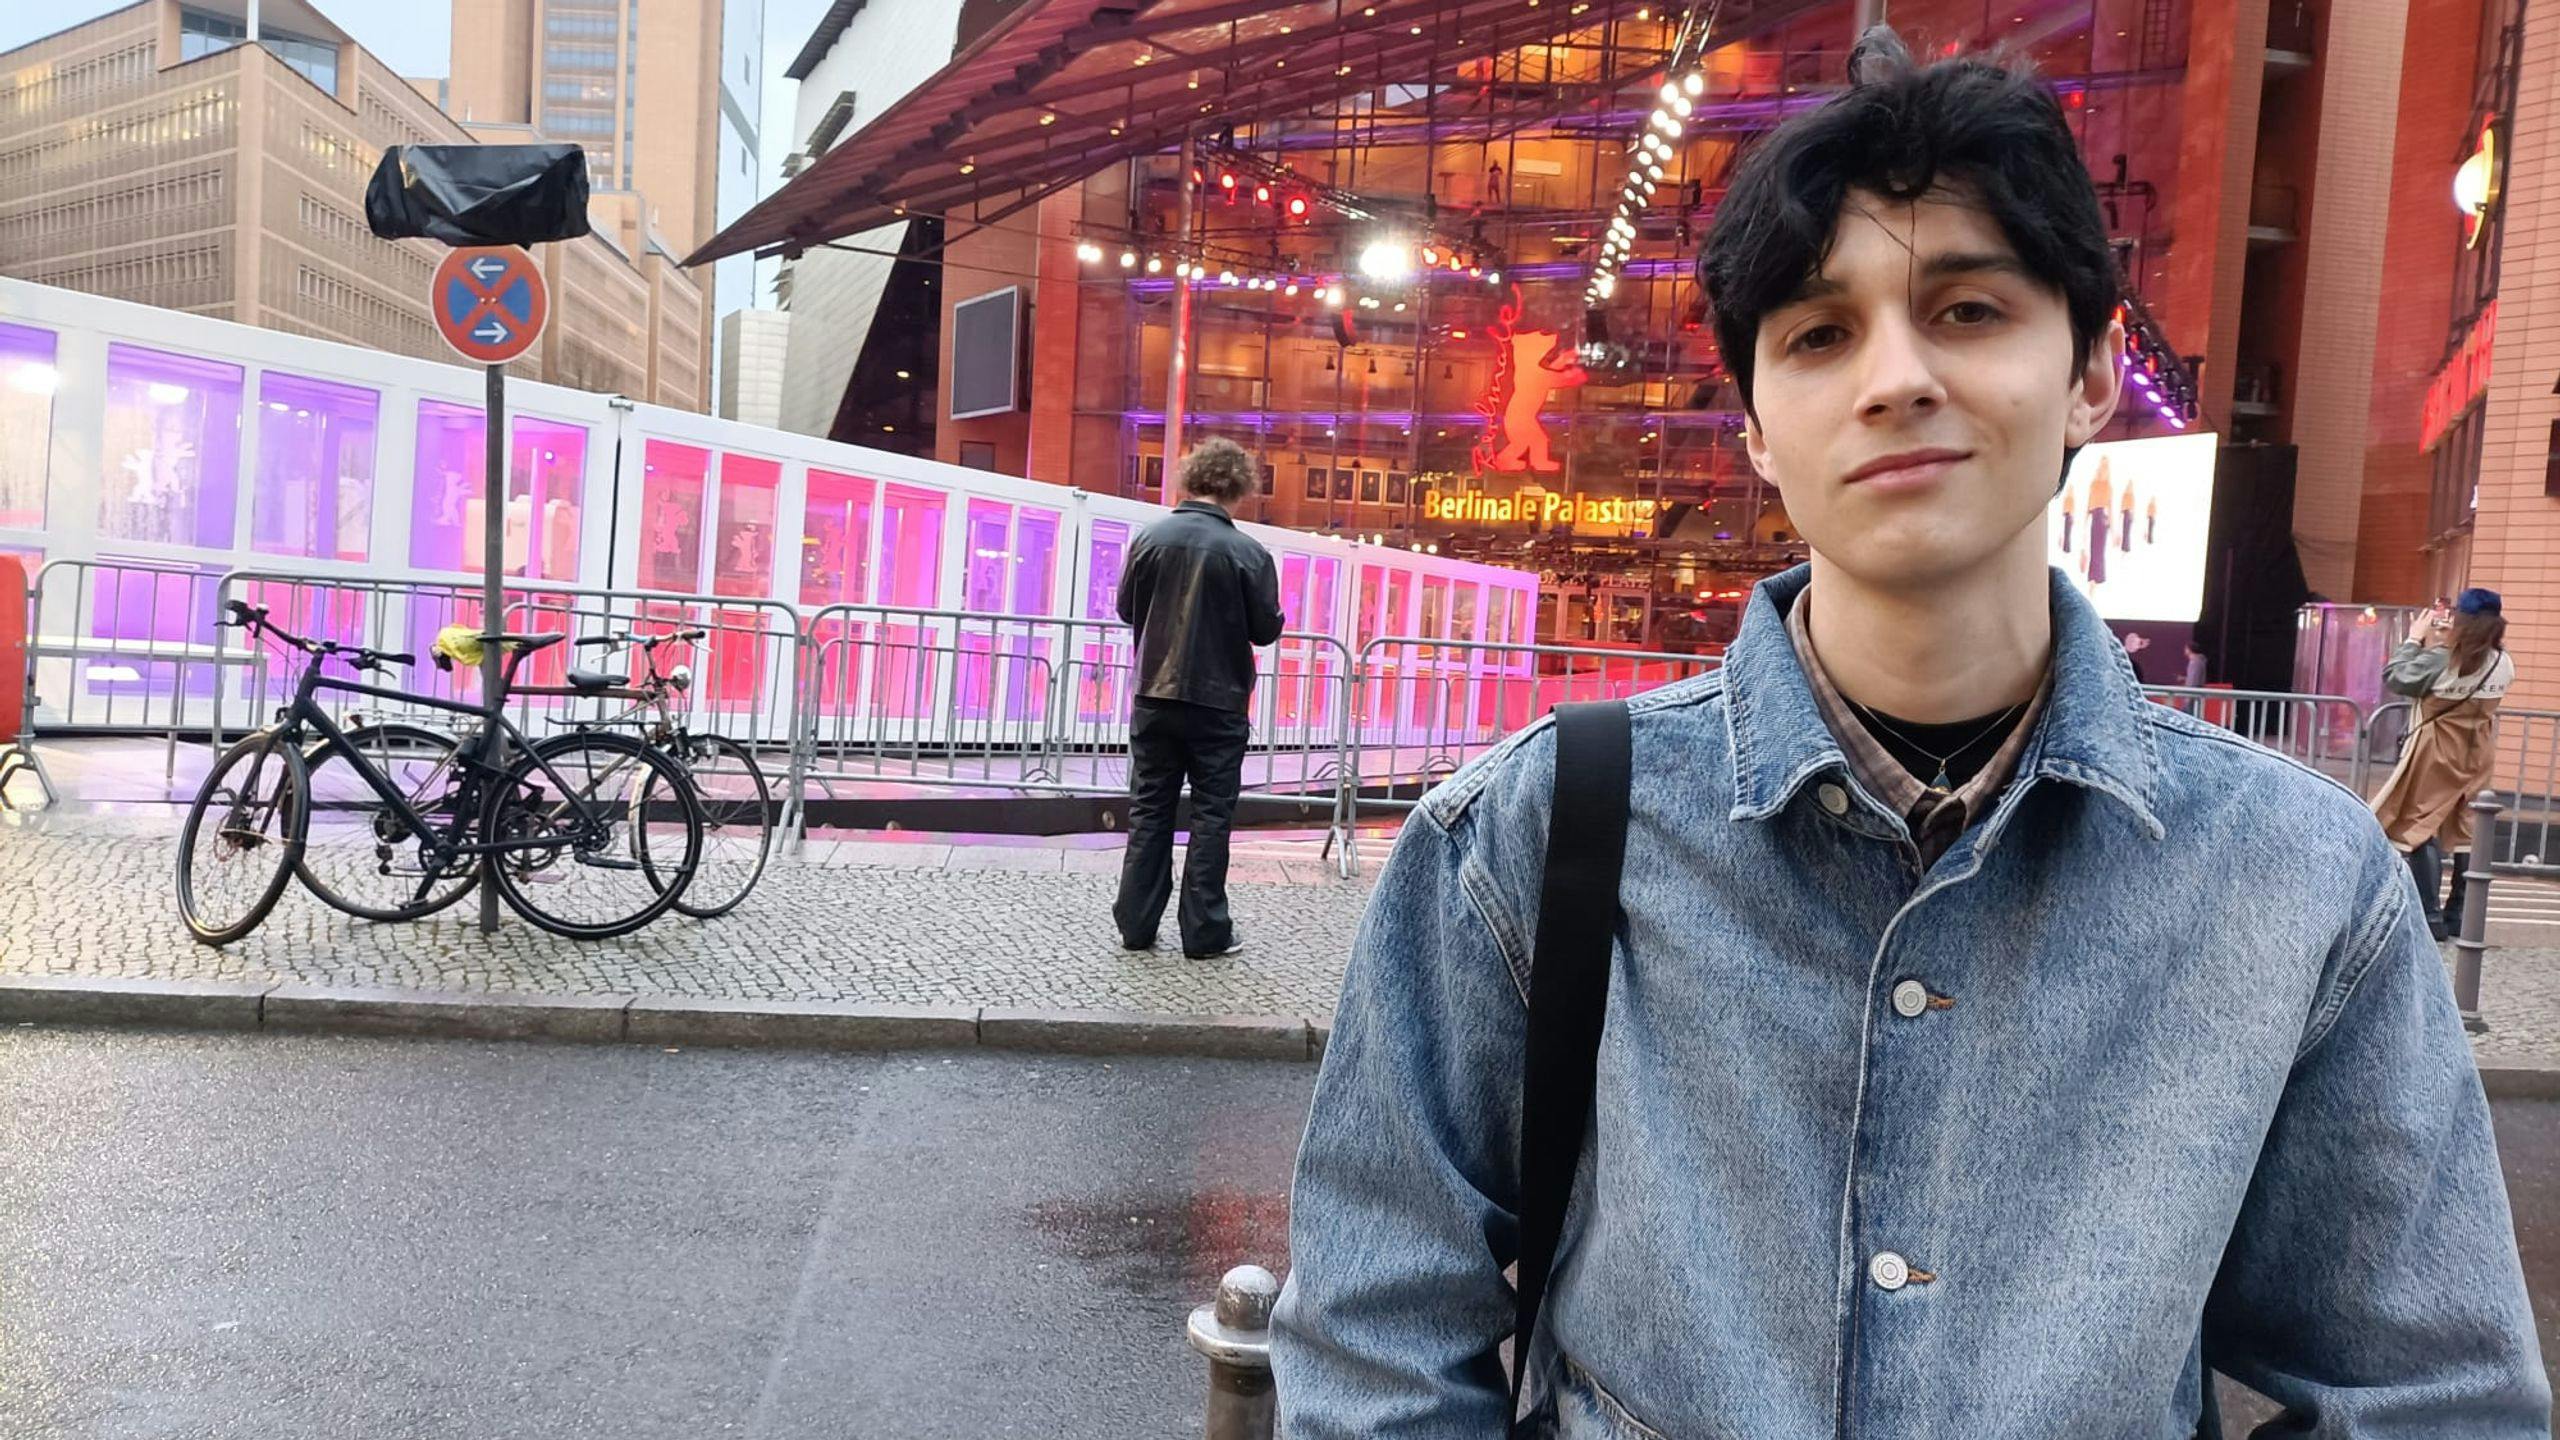 El director Christian Avilés posa ante el Berlinale Palast, una de las sedes del Festival de Berlín